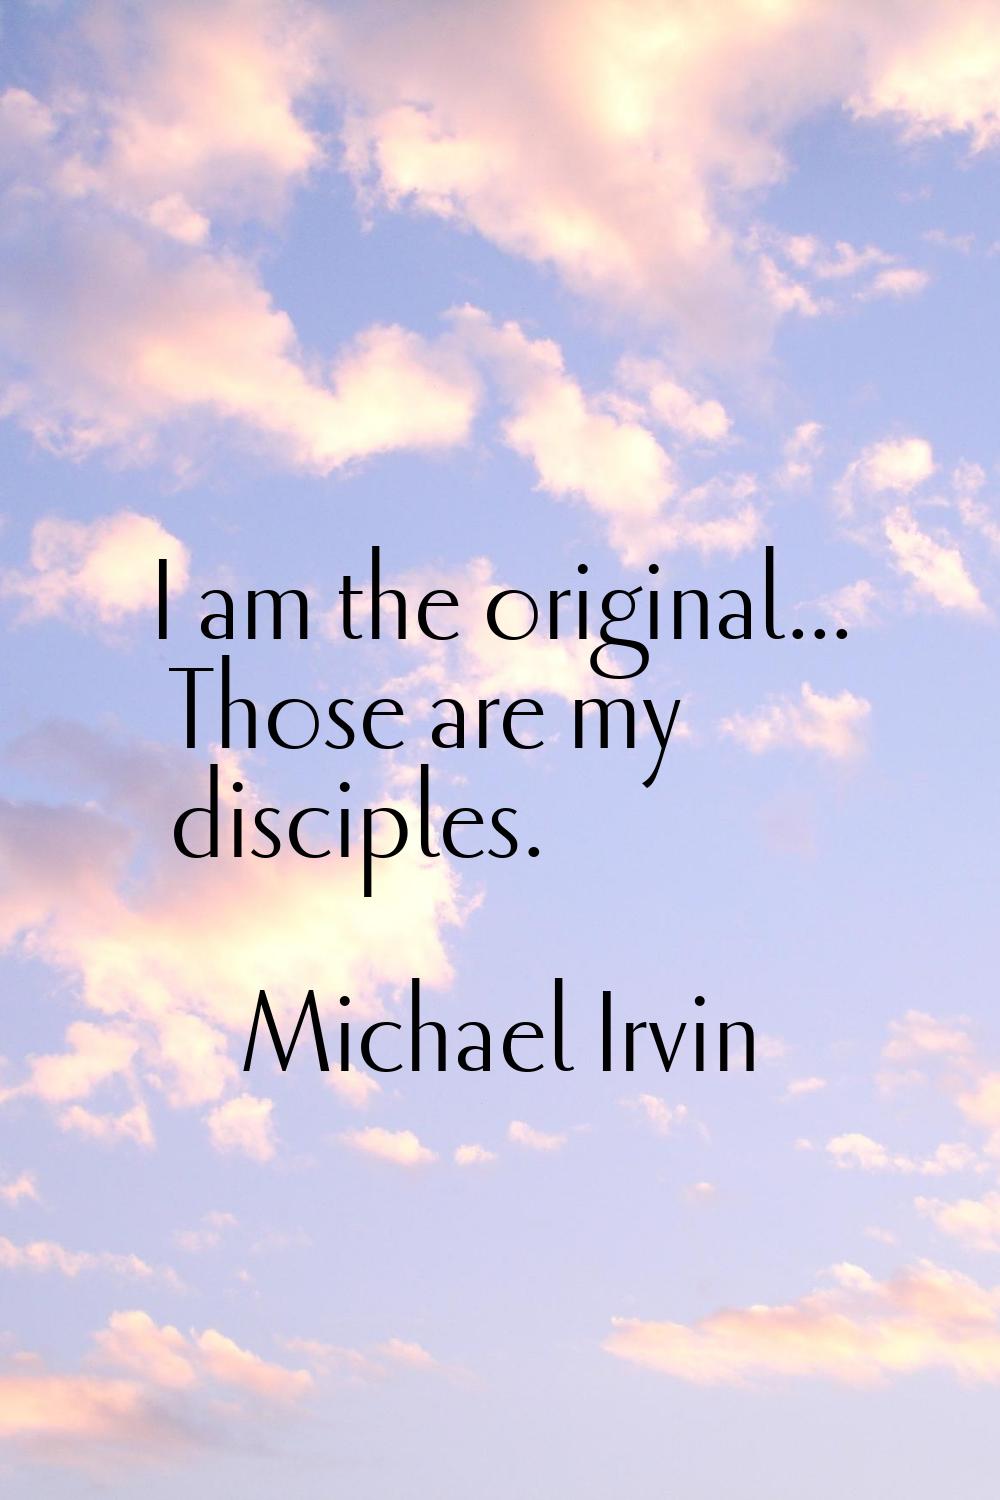 I am the original... Those are my disciples.